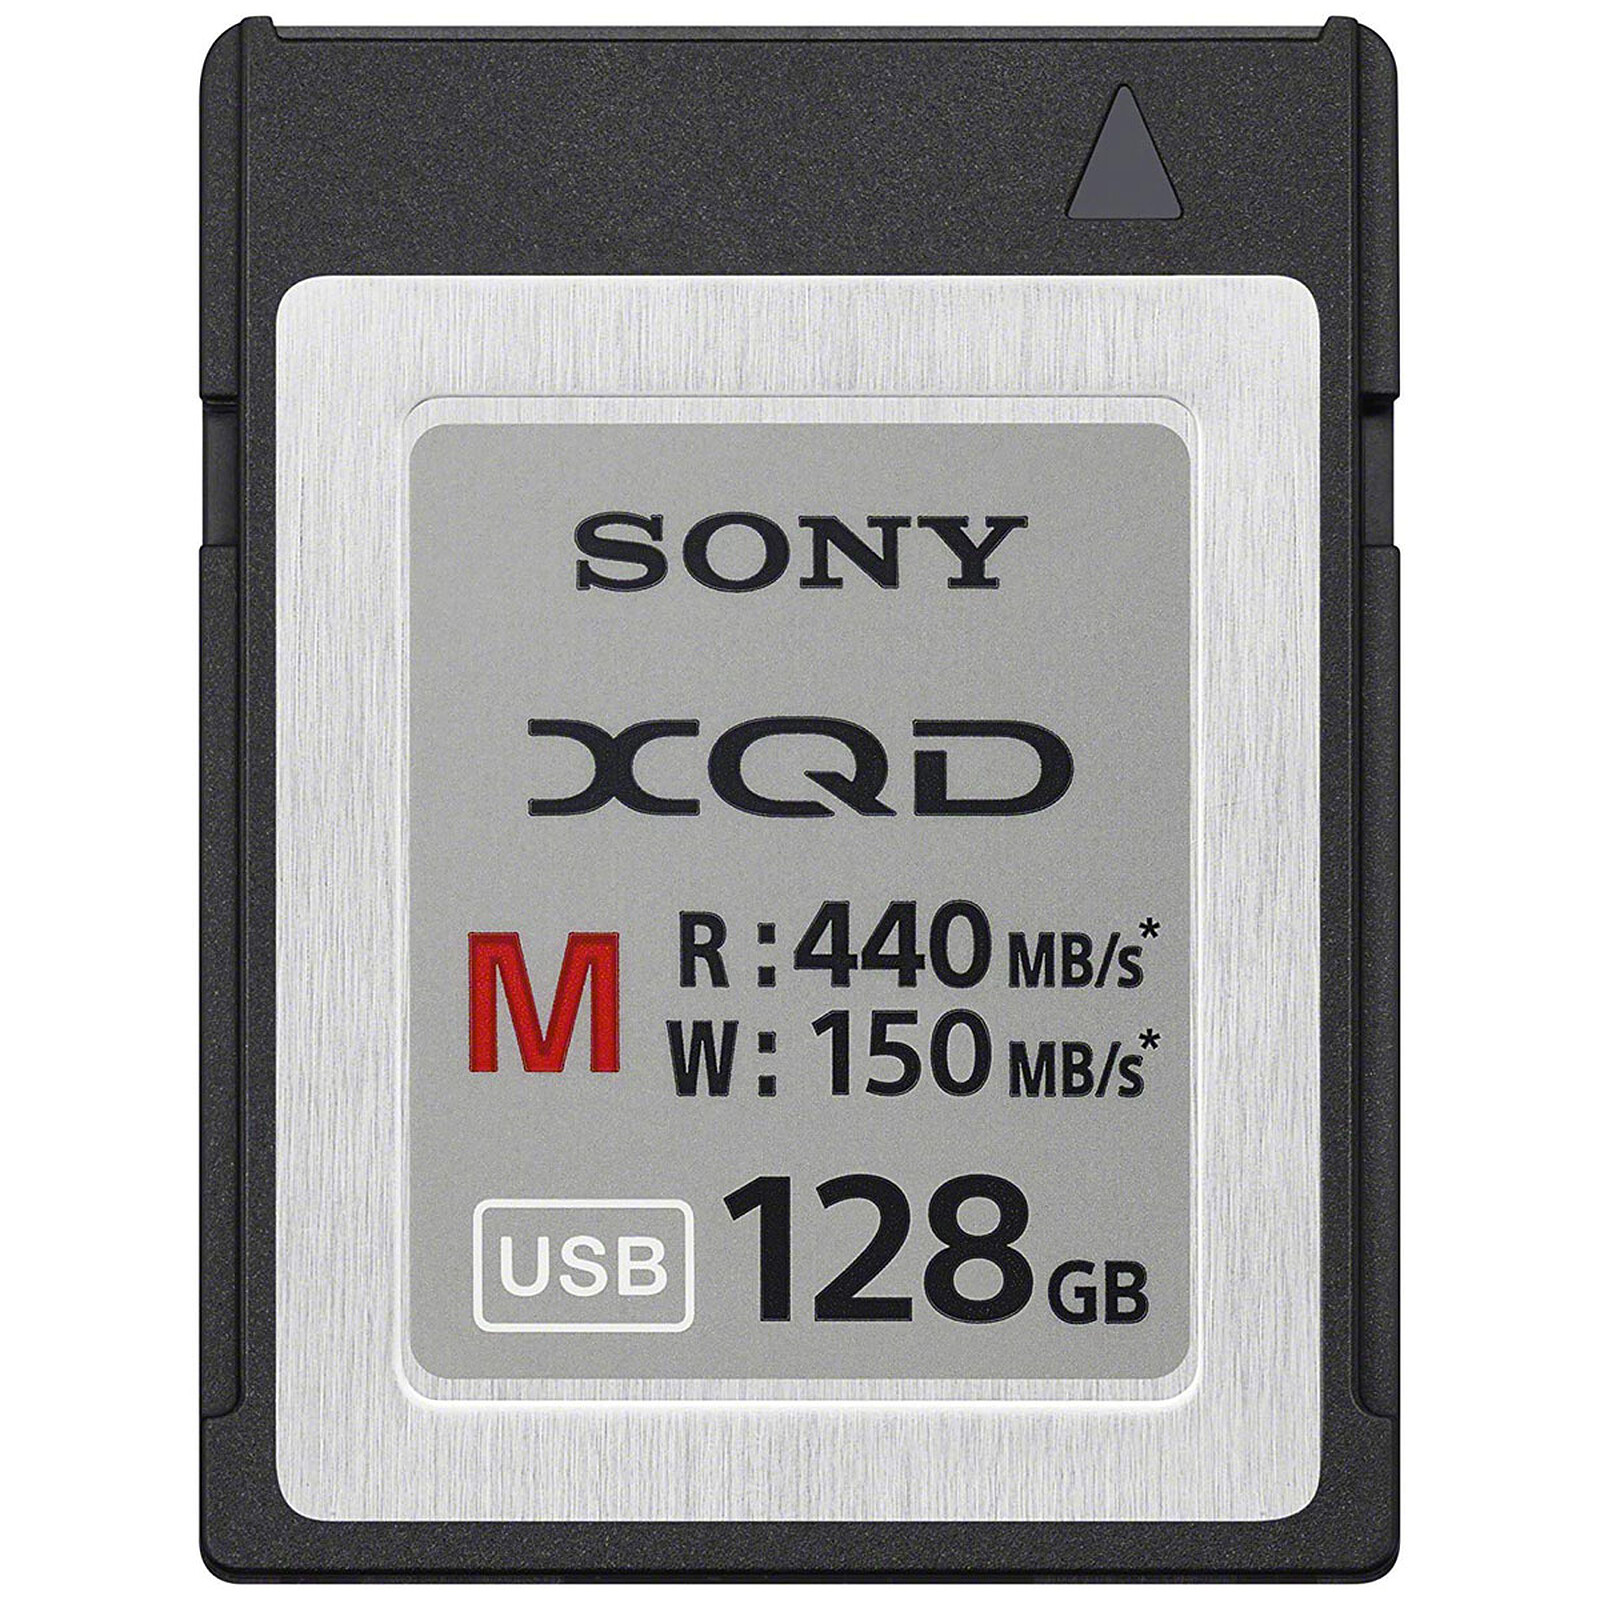 SanDisk Extreme Pro SDHC UHS-I 128 Go (SDSDXXD-128G-GN4IN) - Carte mémoire  - LDLC